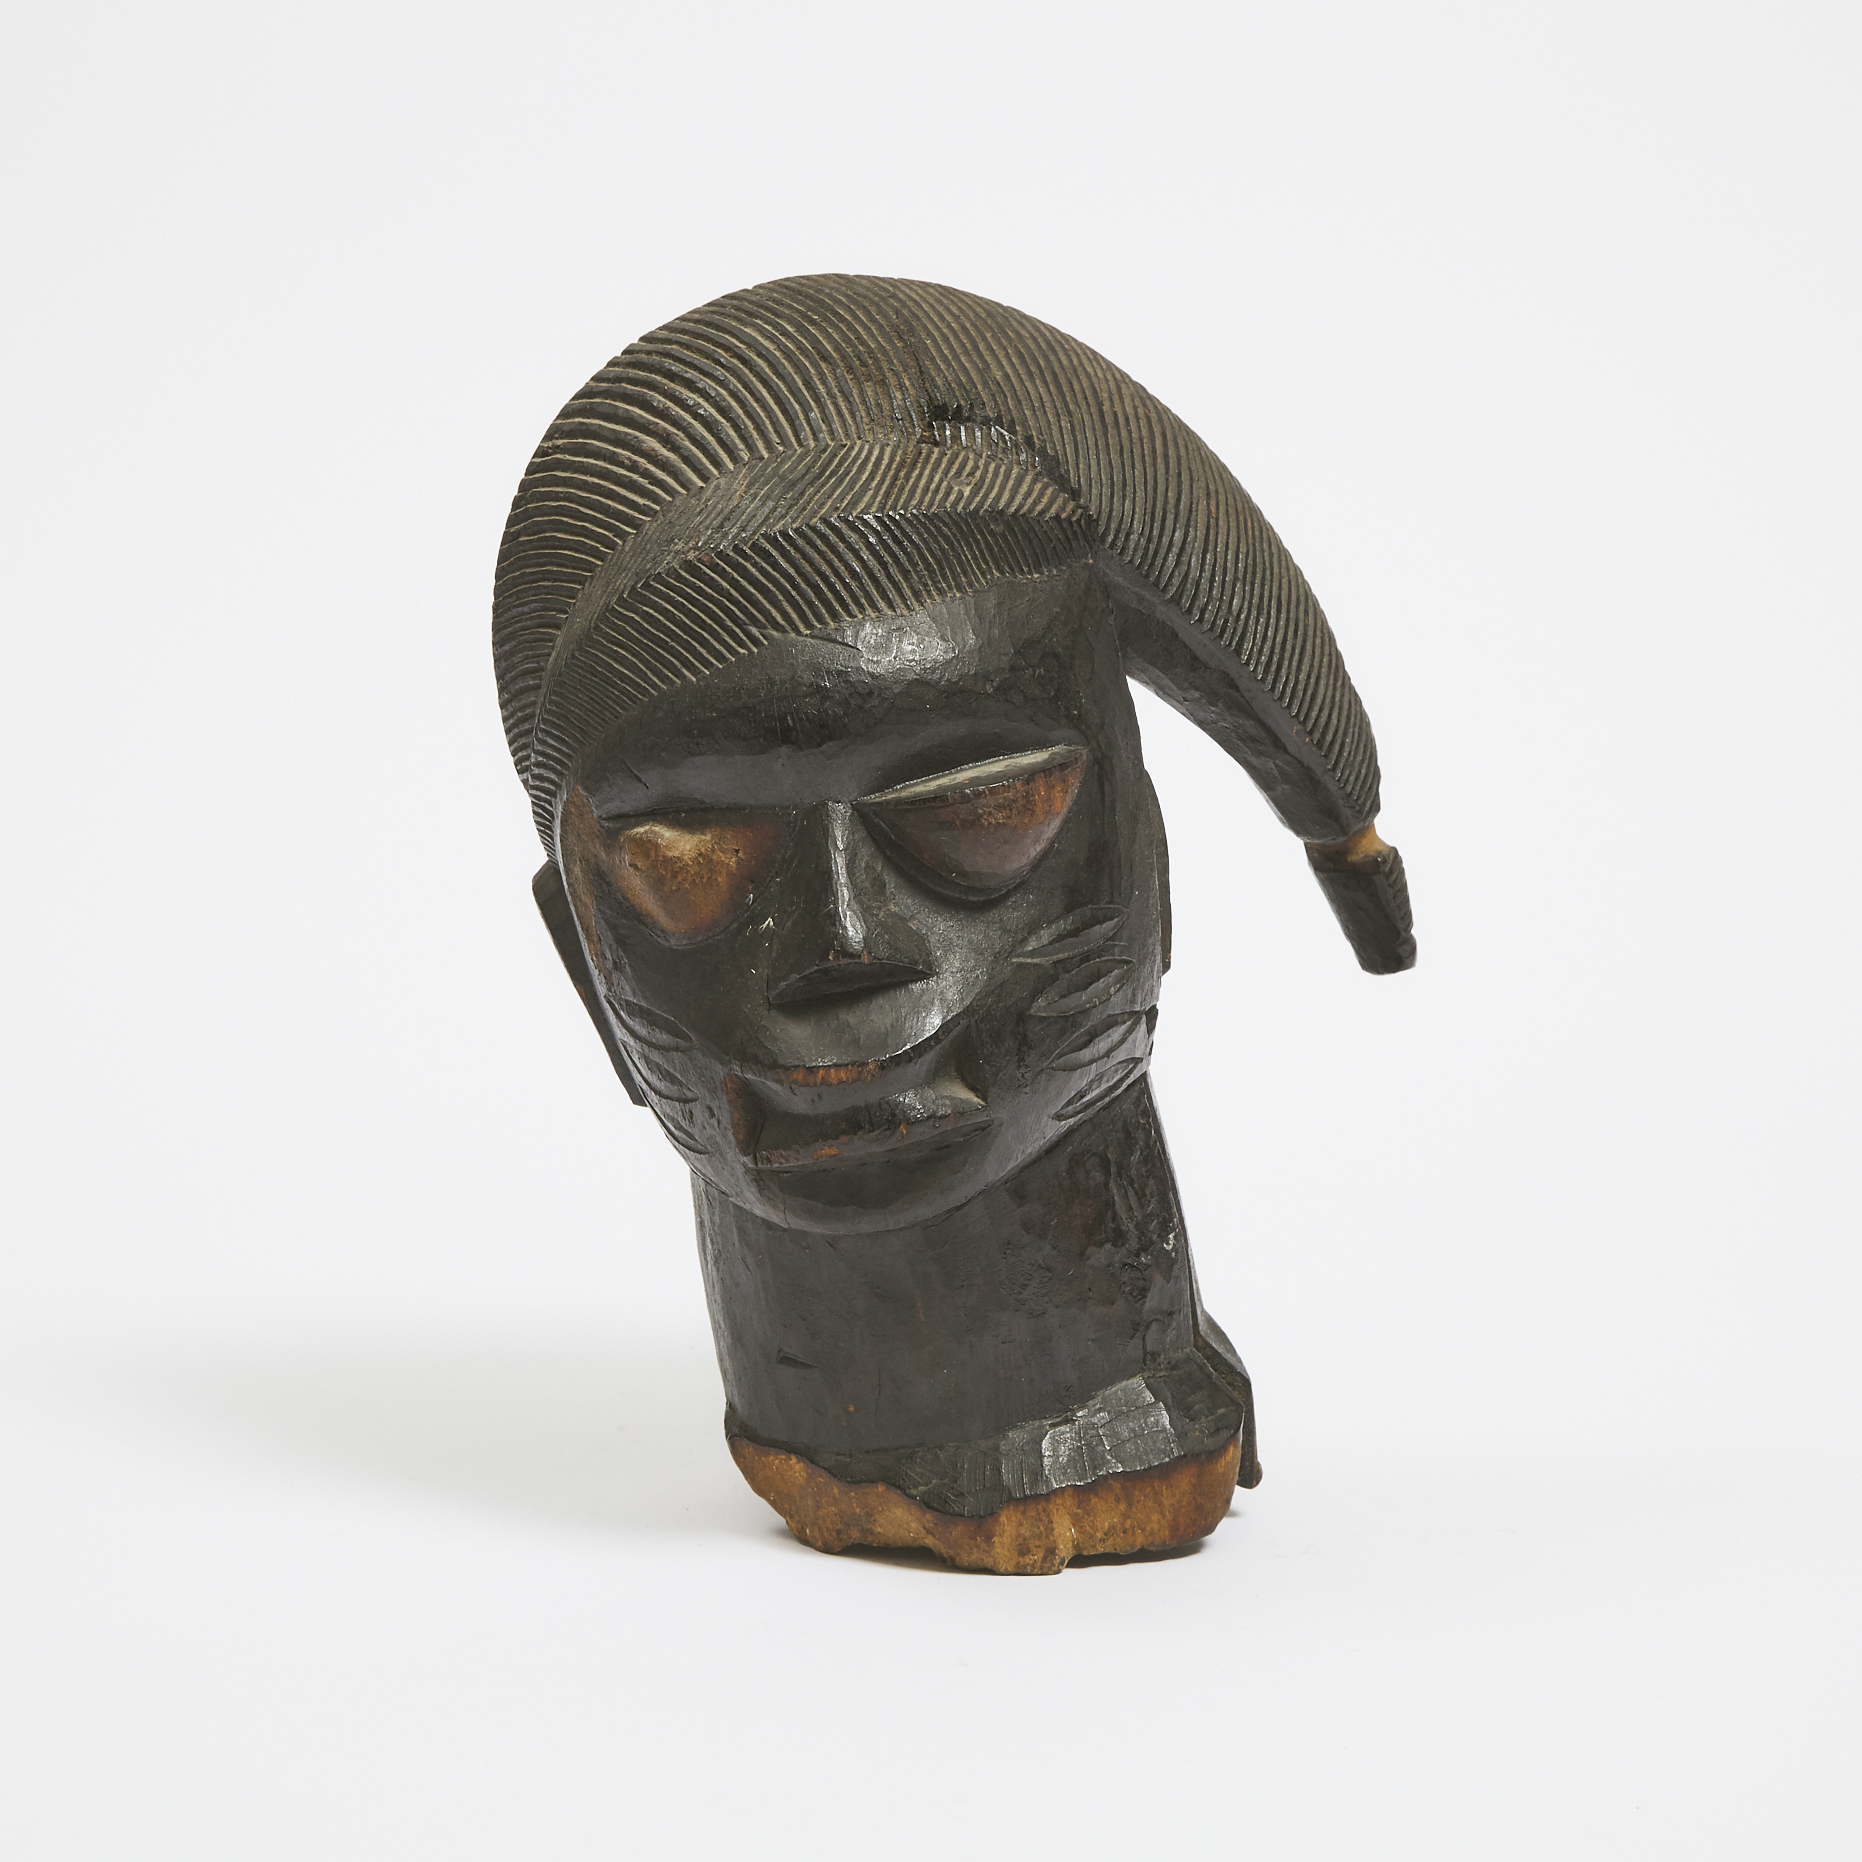 Yoruba Carved Wood Head, Nigeria, West Africa, mid 20th century